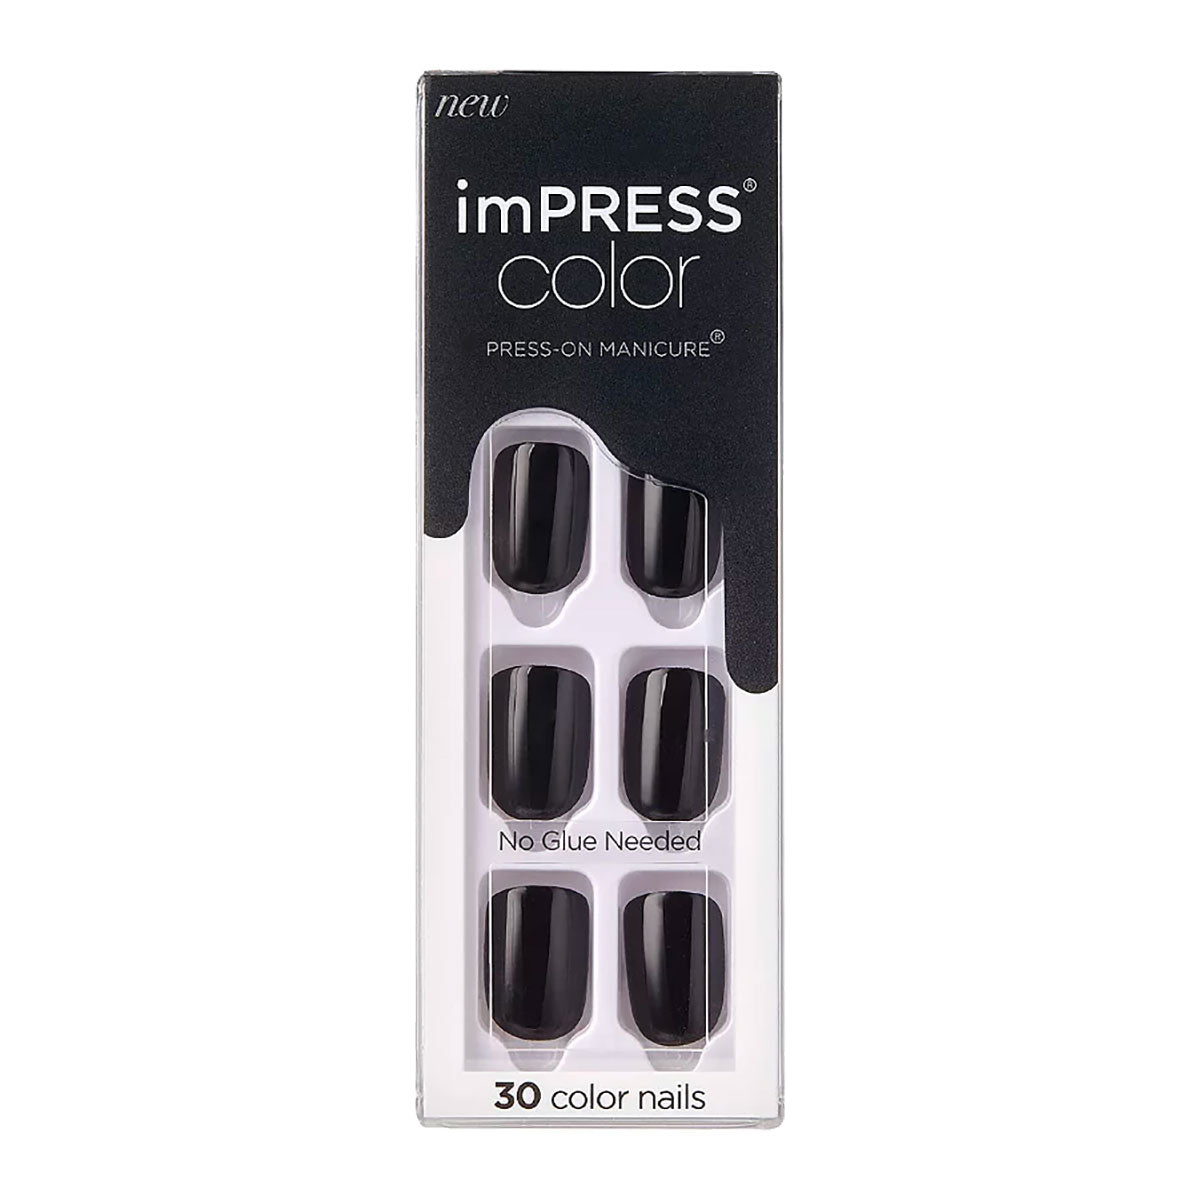 Kiss imPRESS Color Press-On Manicure | All Black